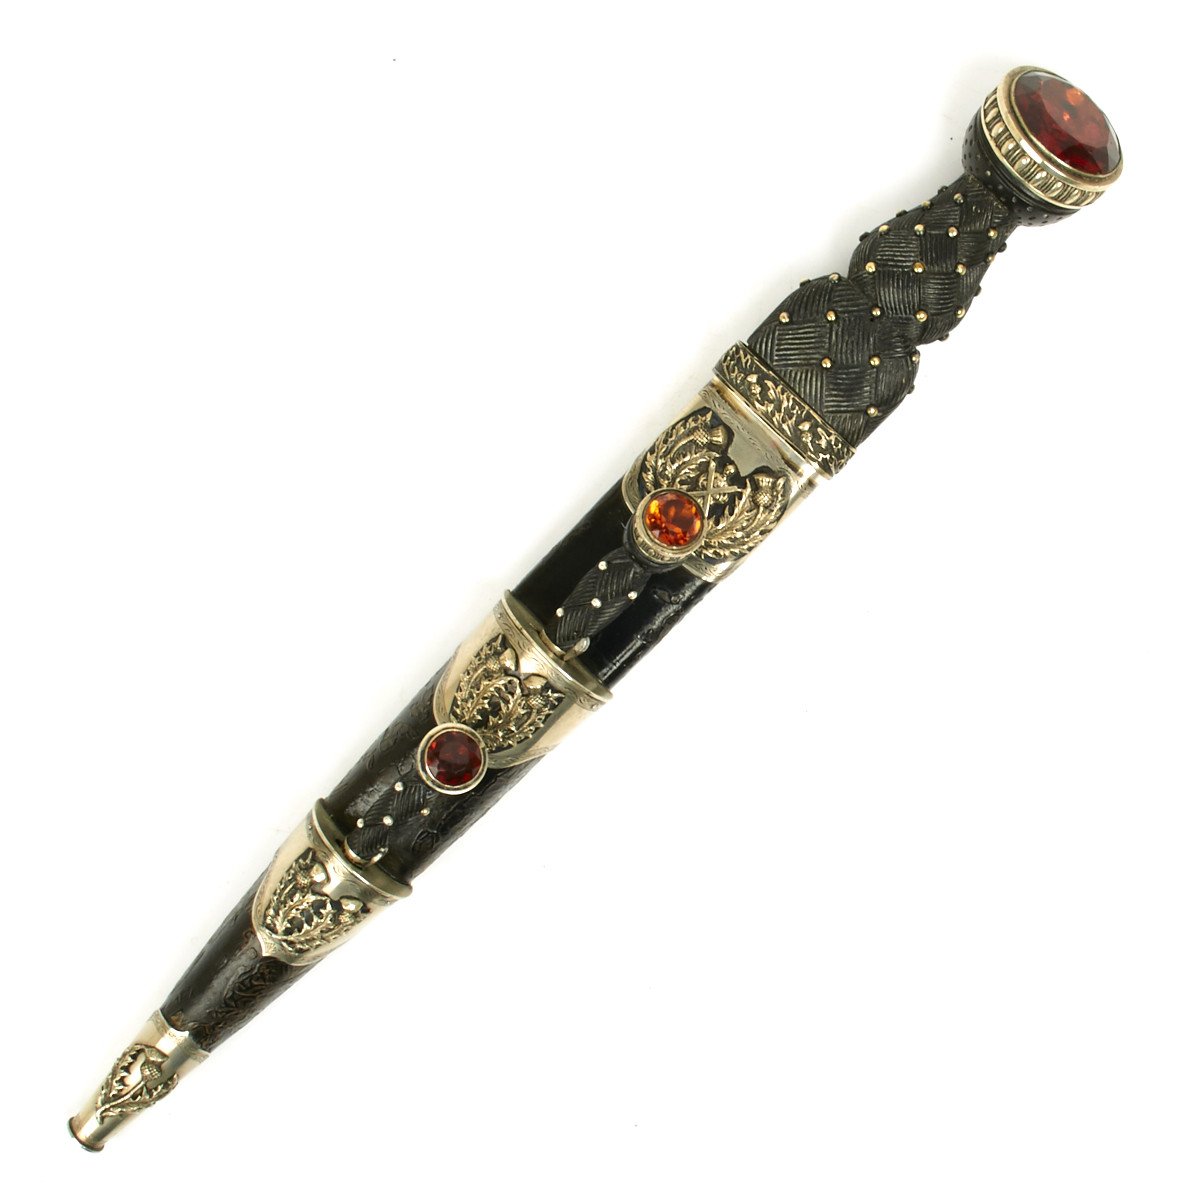 Vintage knife pen - Big soviet sword pen - Dirk ballpoint pen